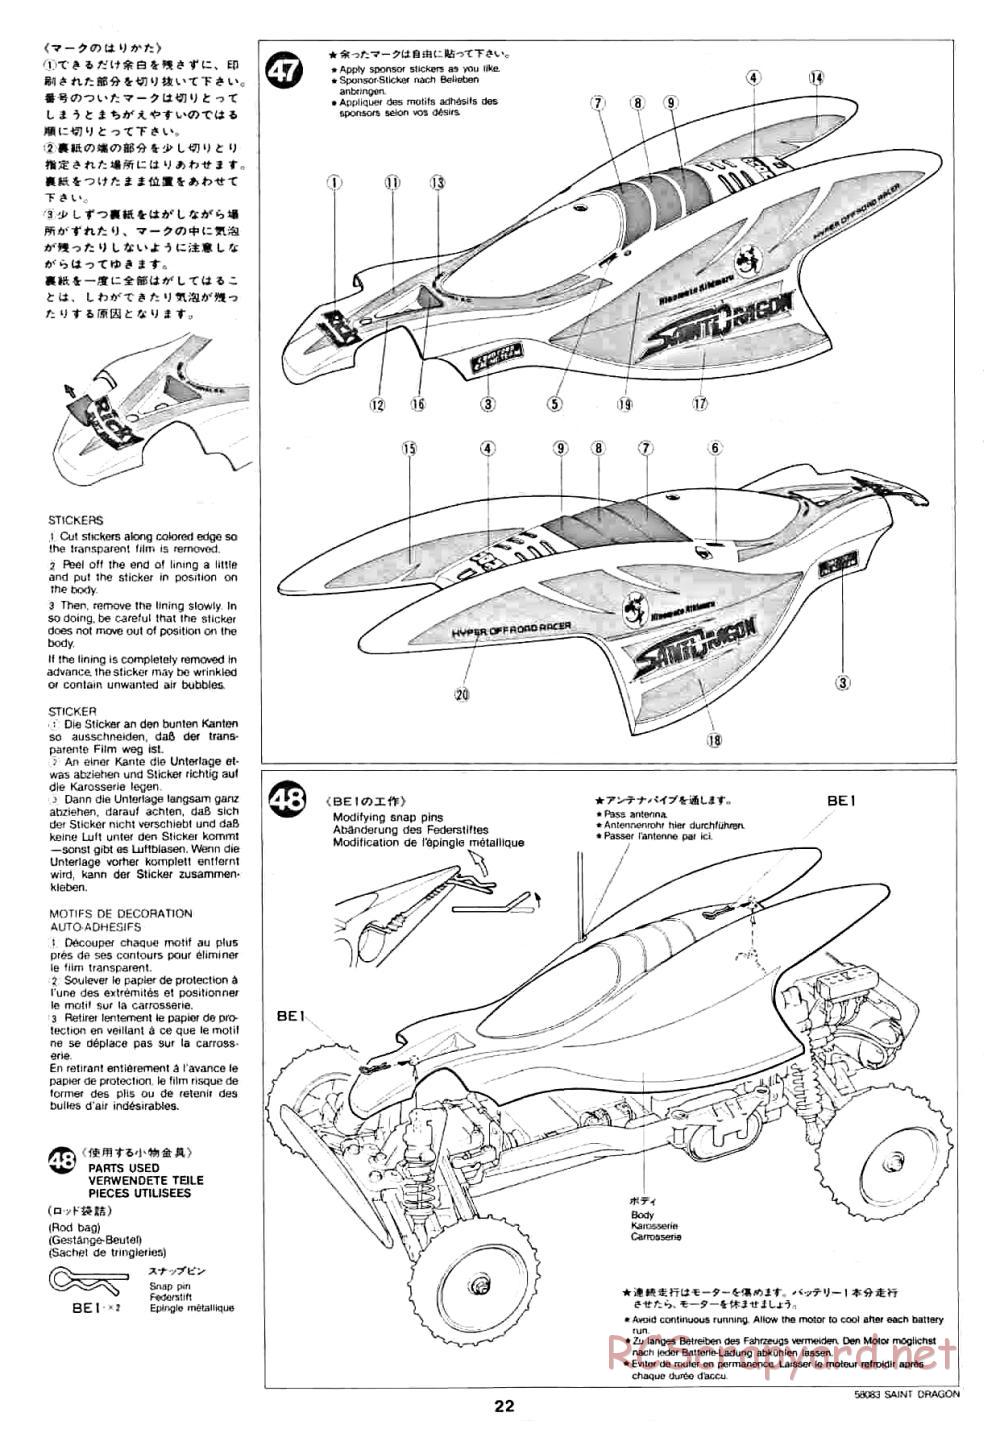 Tamiya - Saint Dragon - 58083 - Manual - Page 22